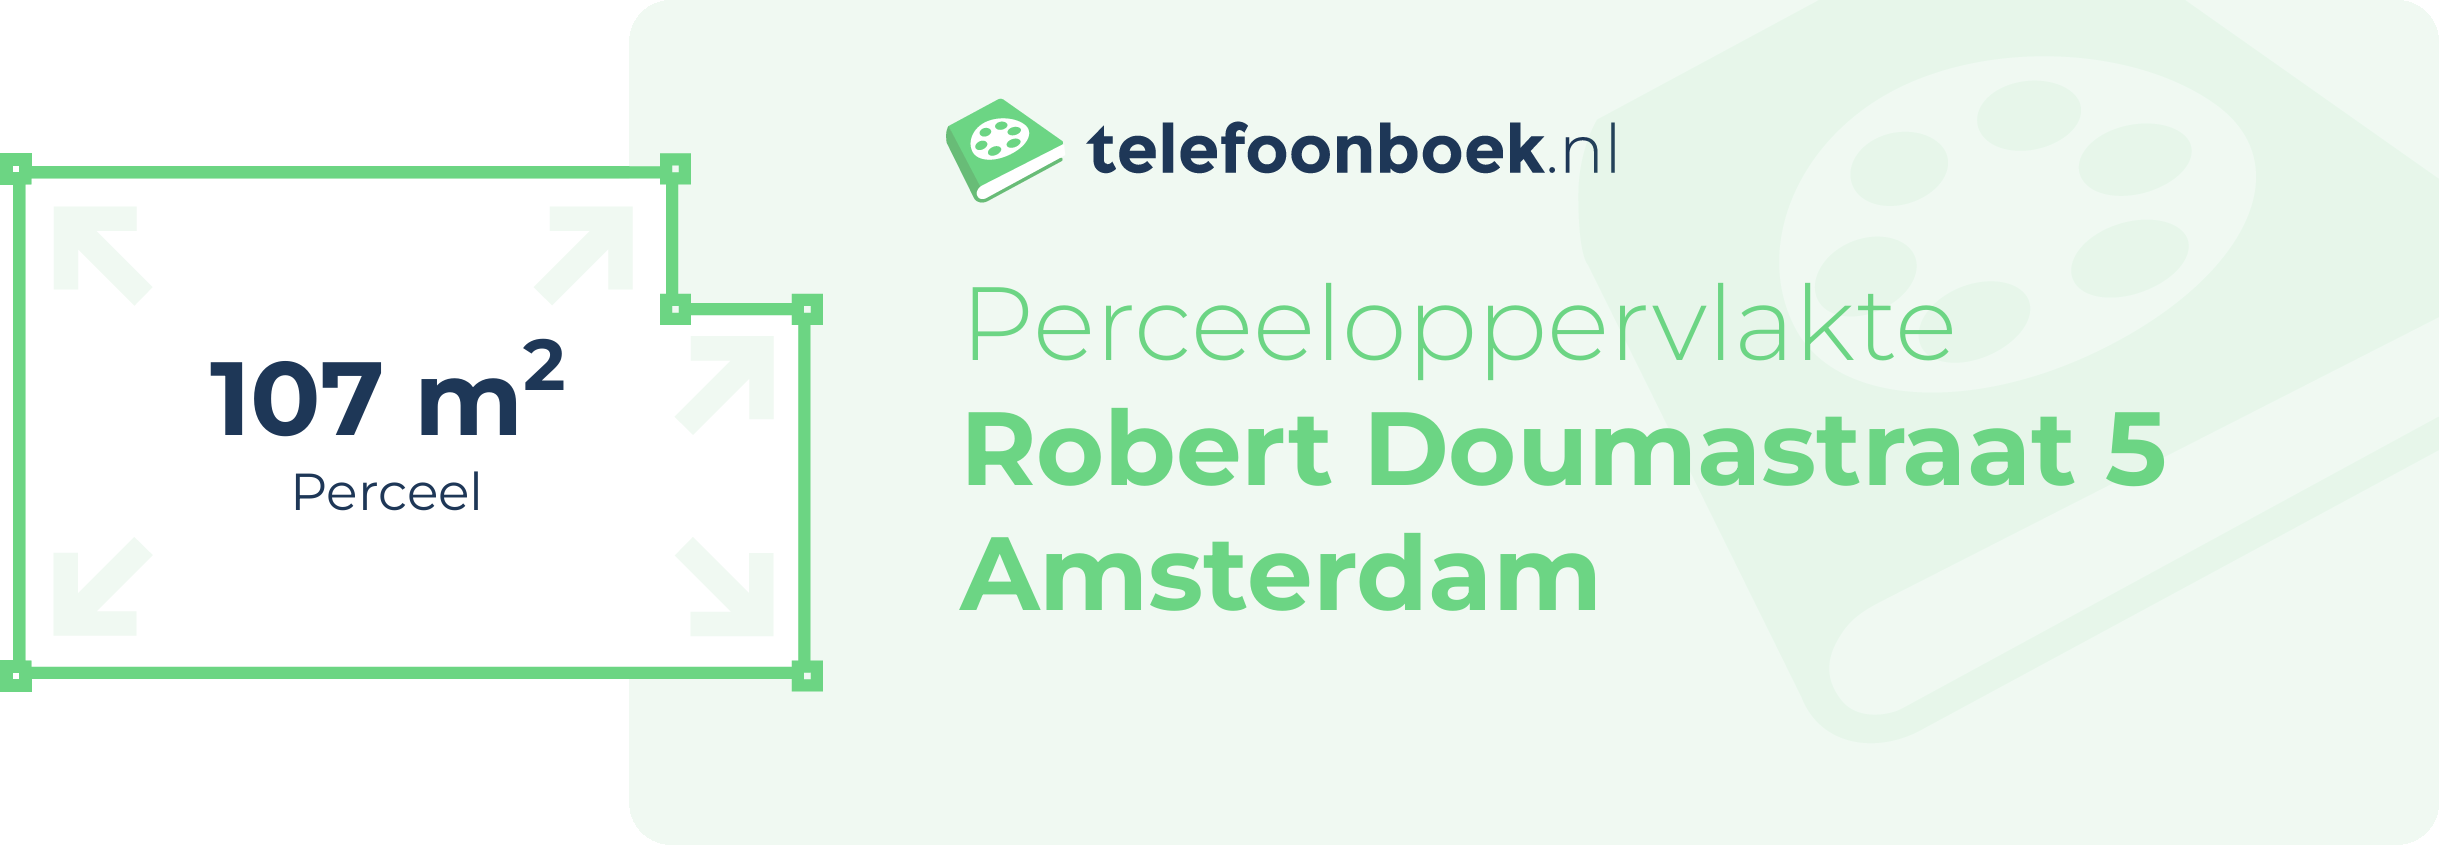 Perceeloppervlakte Robert Doumastraat 5 Amsterdam